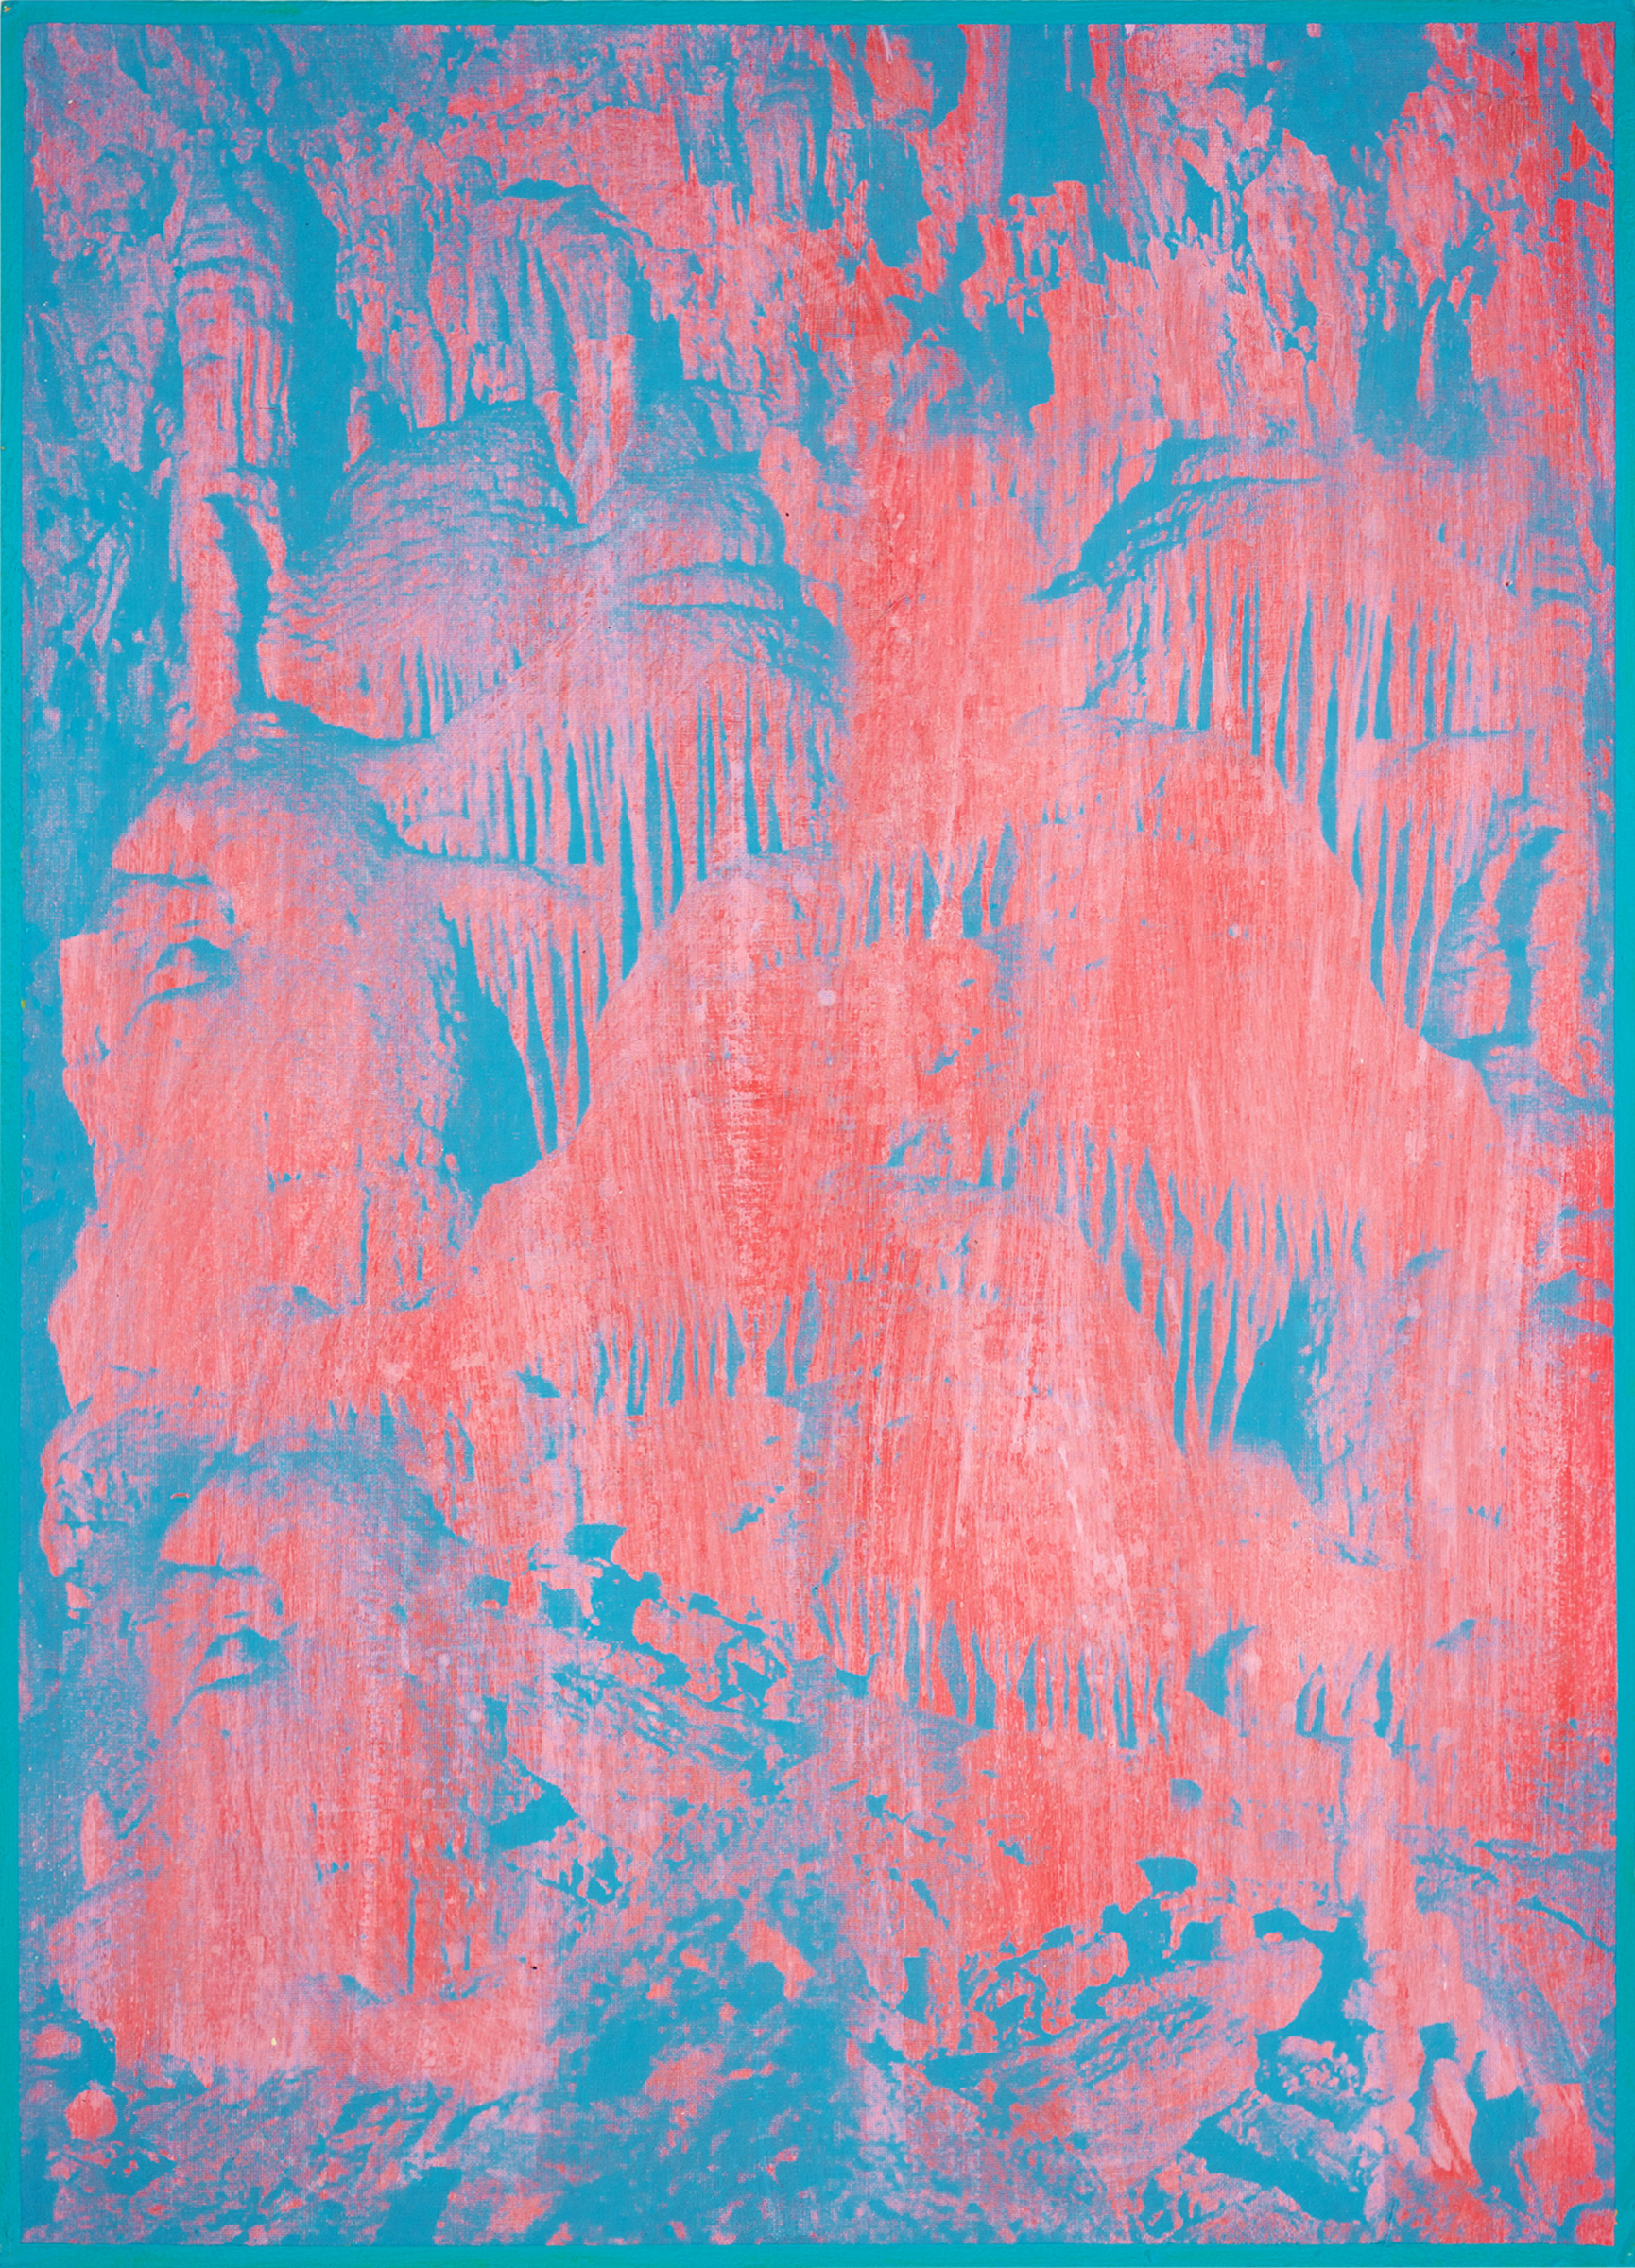  GWENAËL RATTKE  Caves of Lebanon , 2012 acrylic and silkscreen with hand working on museum board, 27.5” x 19.75” 